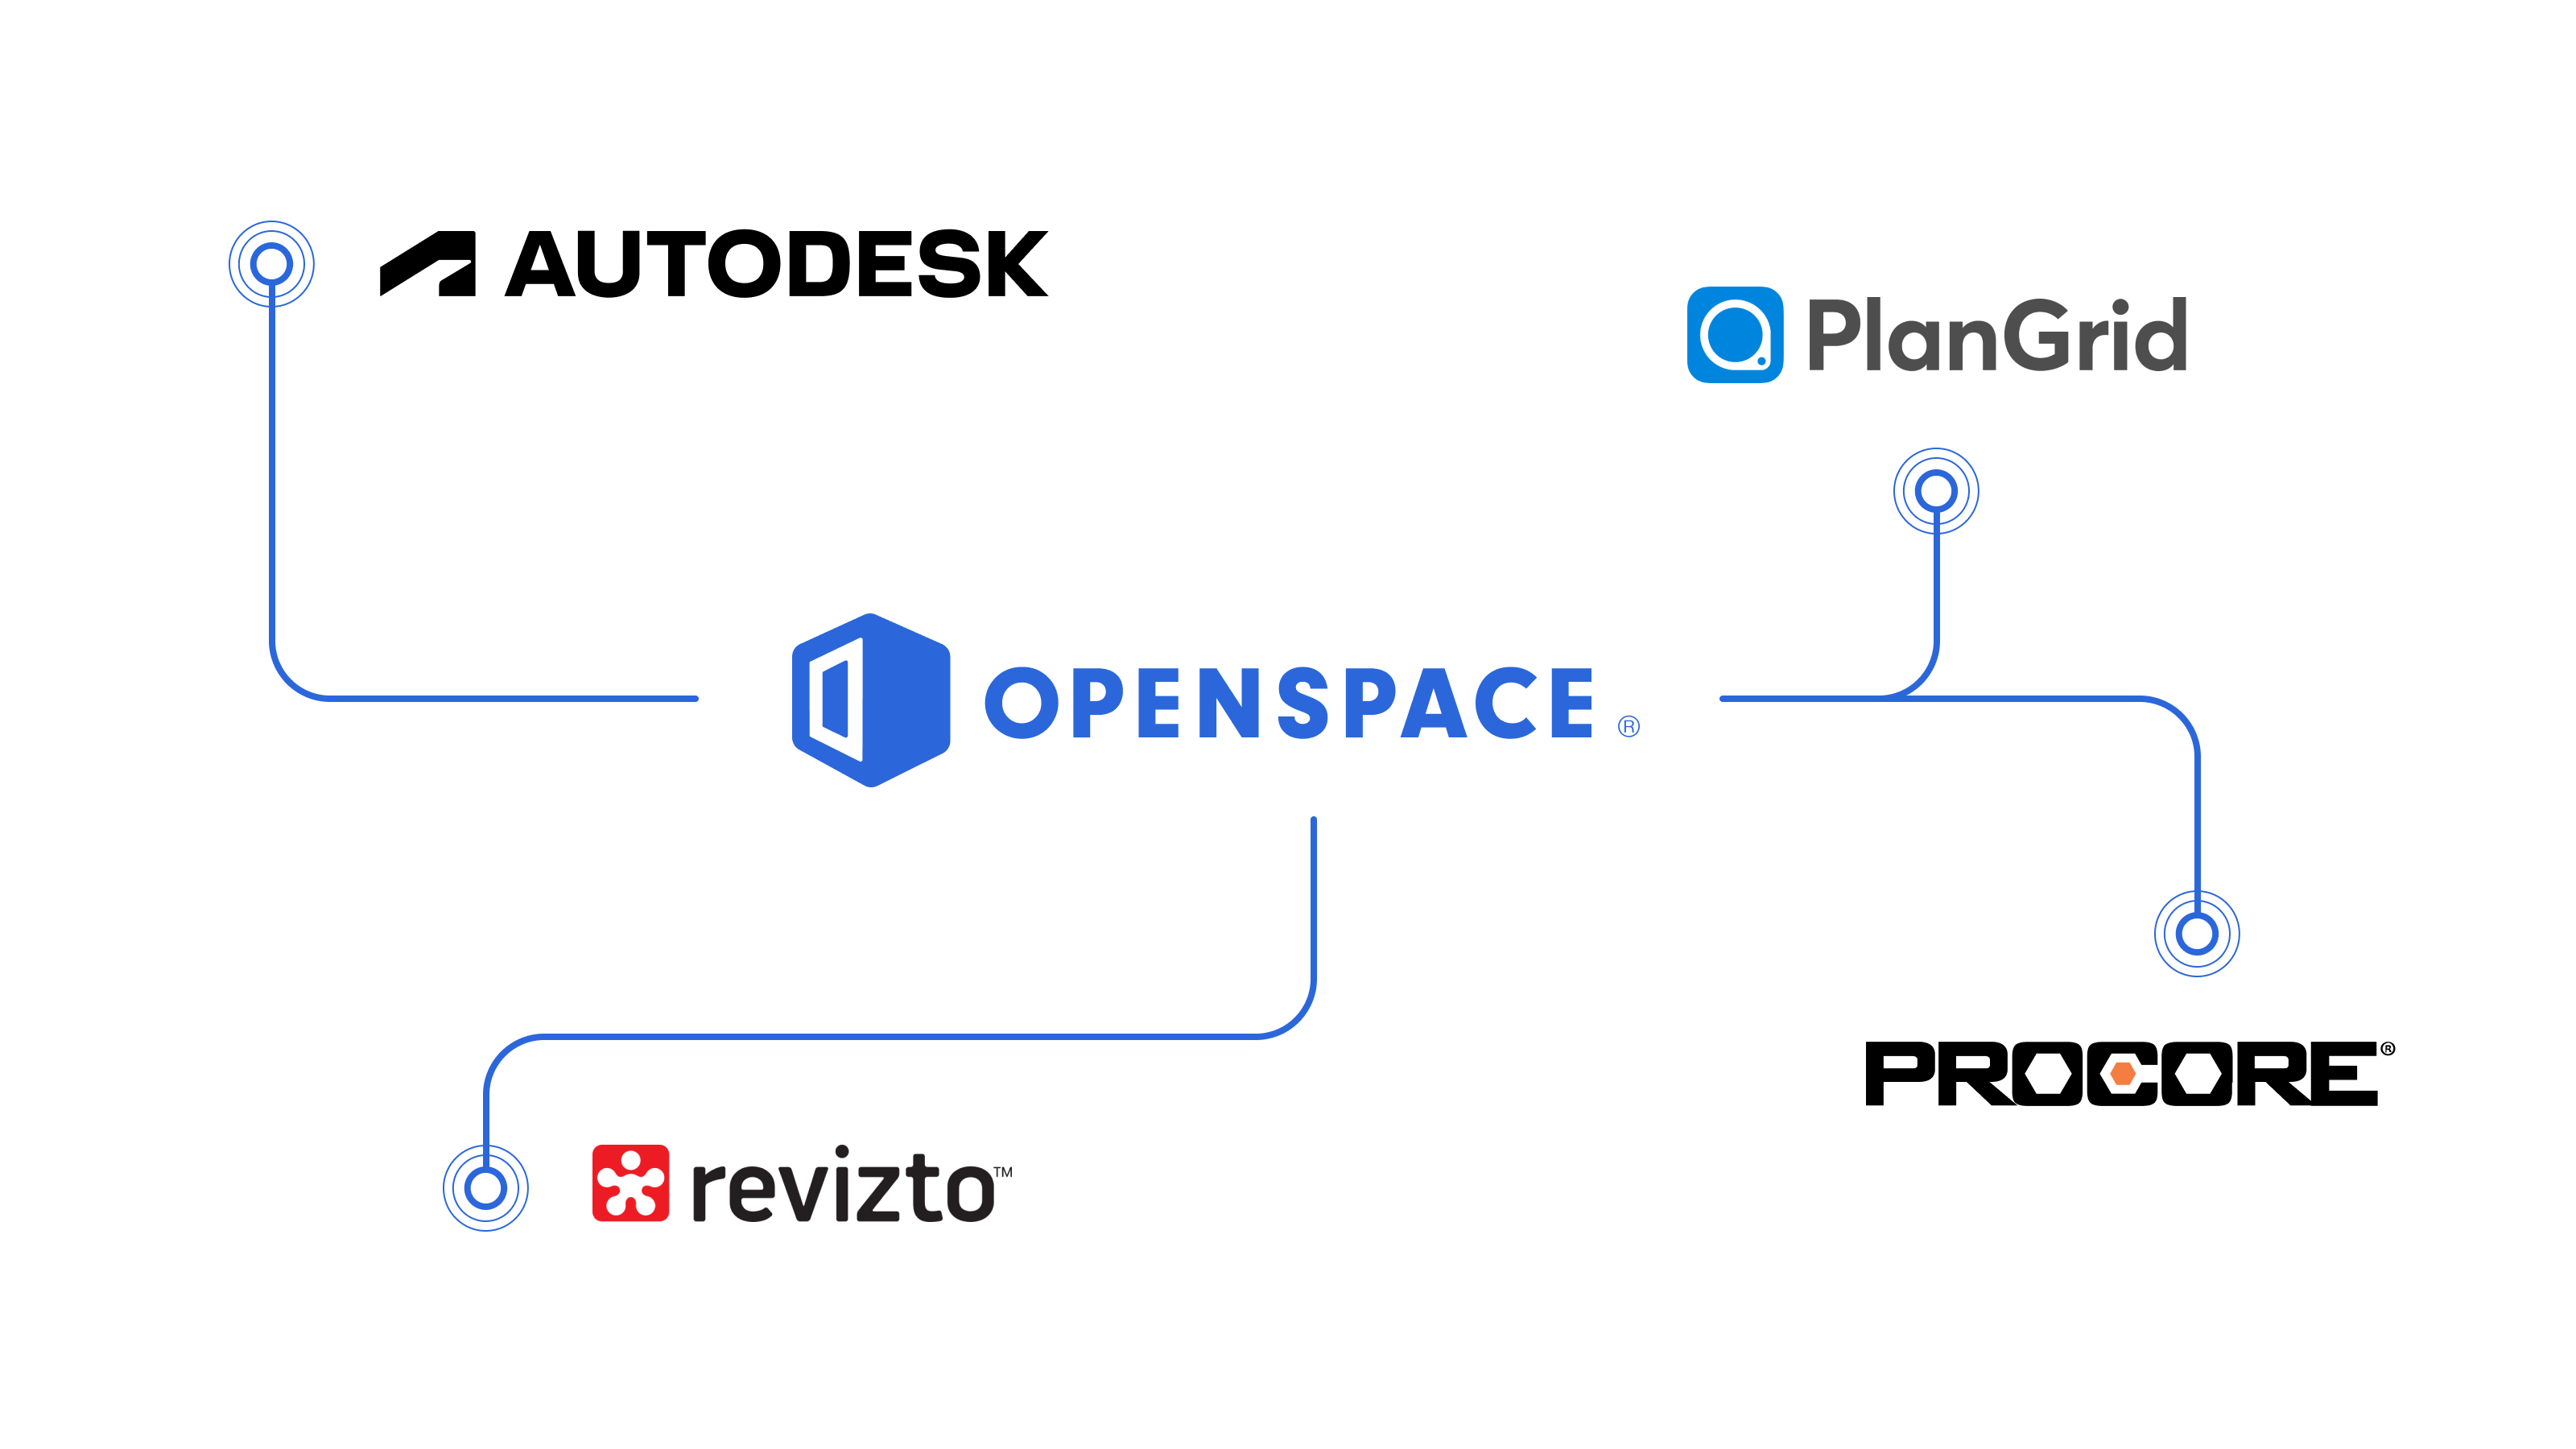 openspace autodesk procore revisto and plangrid integrations 1600 x 900 px